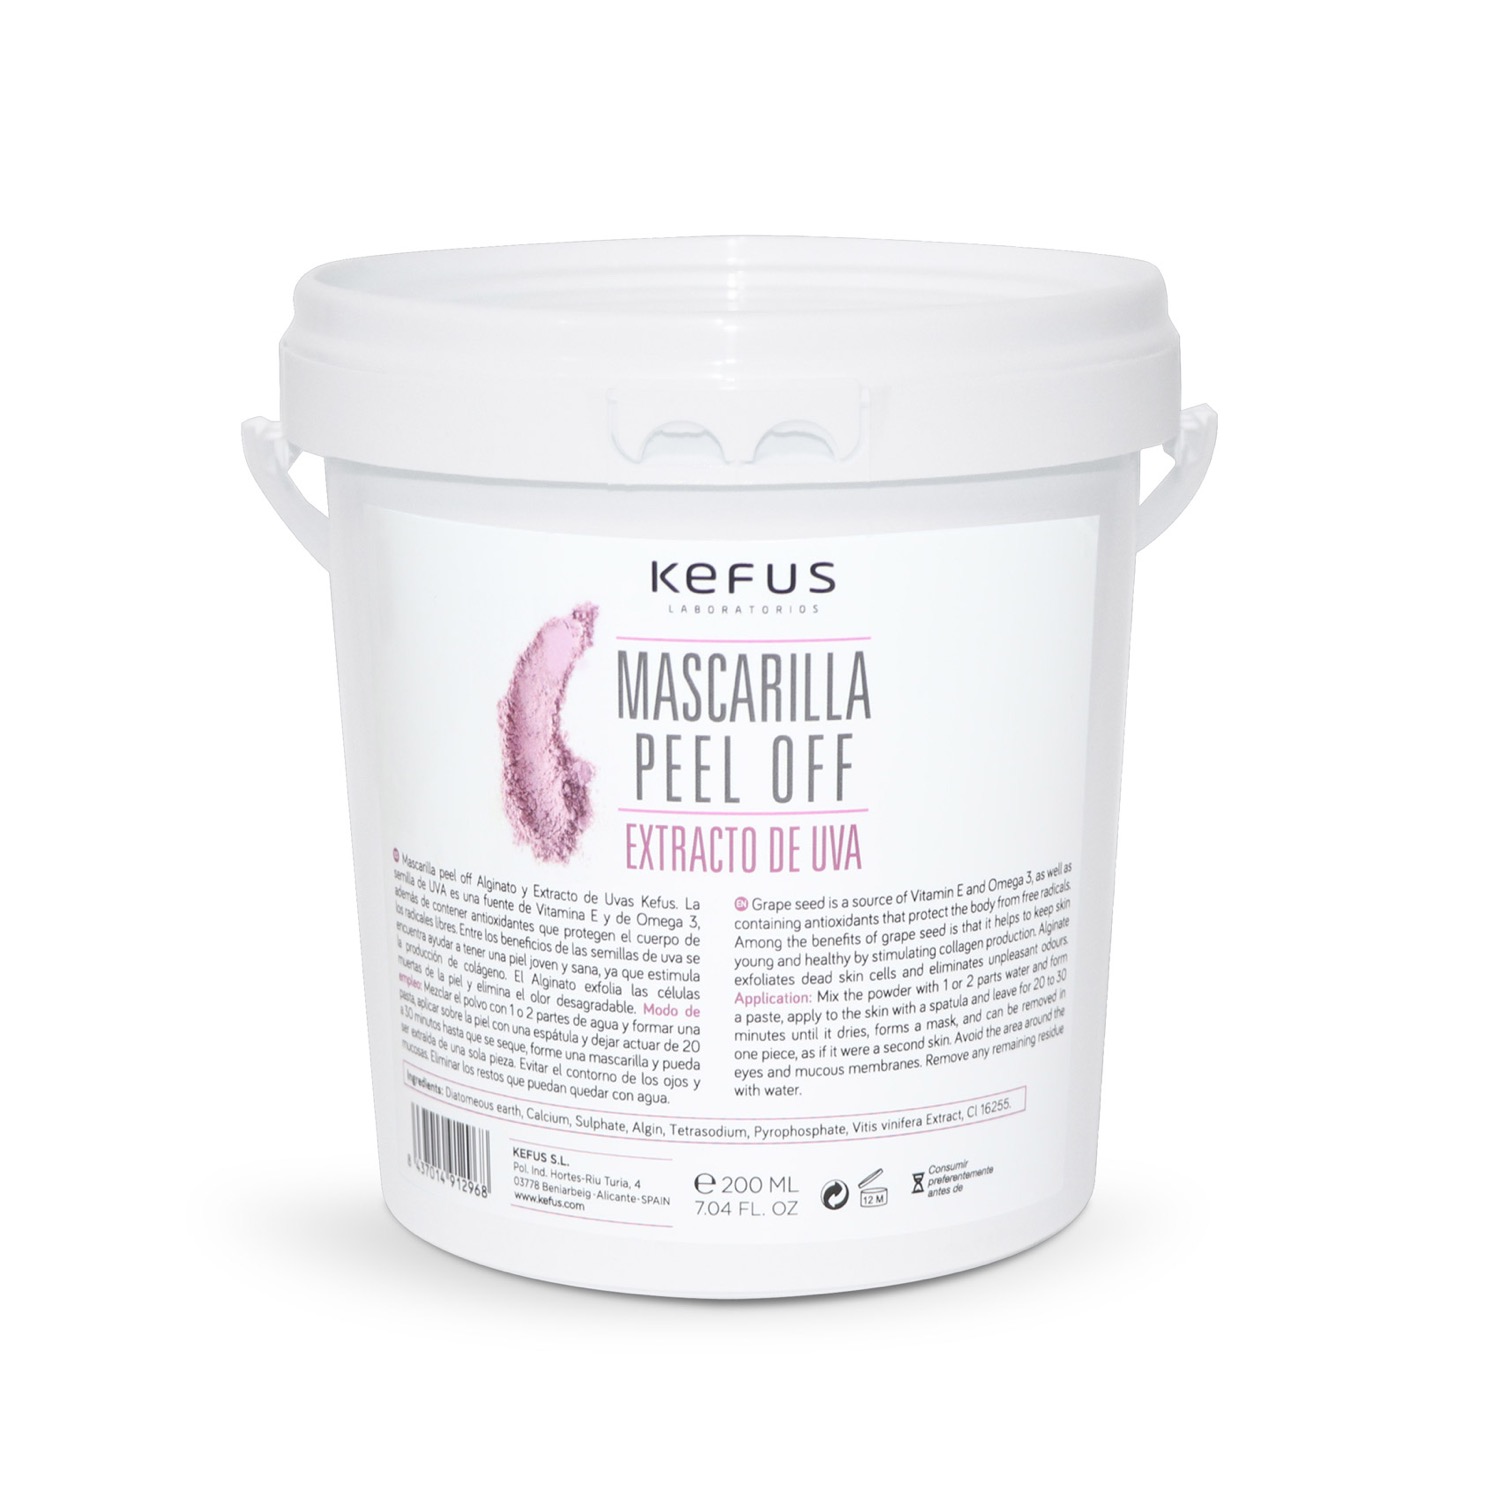 Mascarilla Peel Off Alginato Extracto de Uvas Kefus 200 g